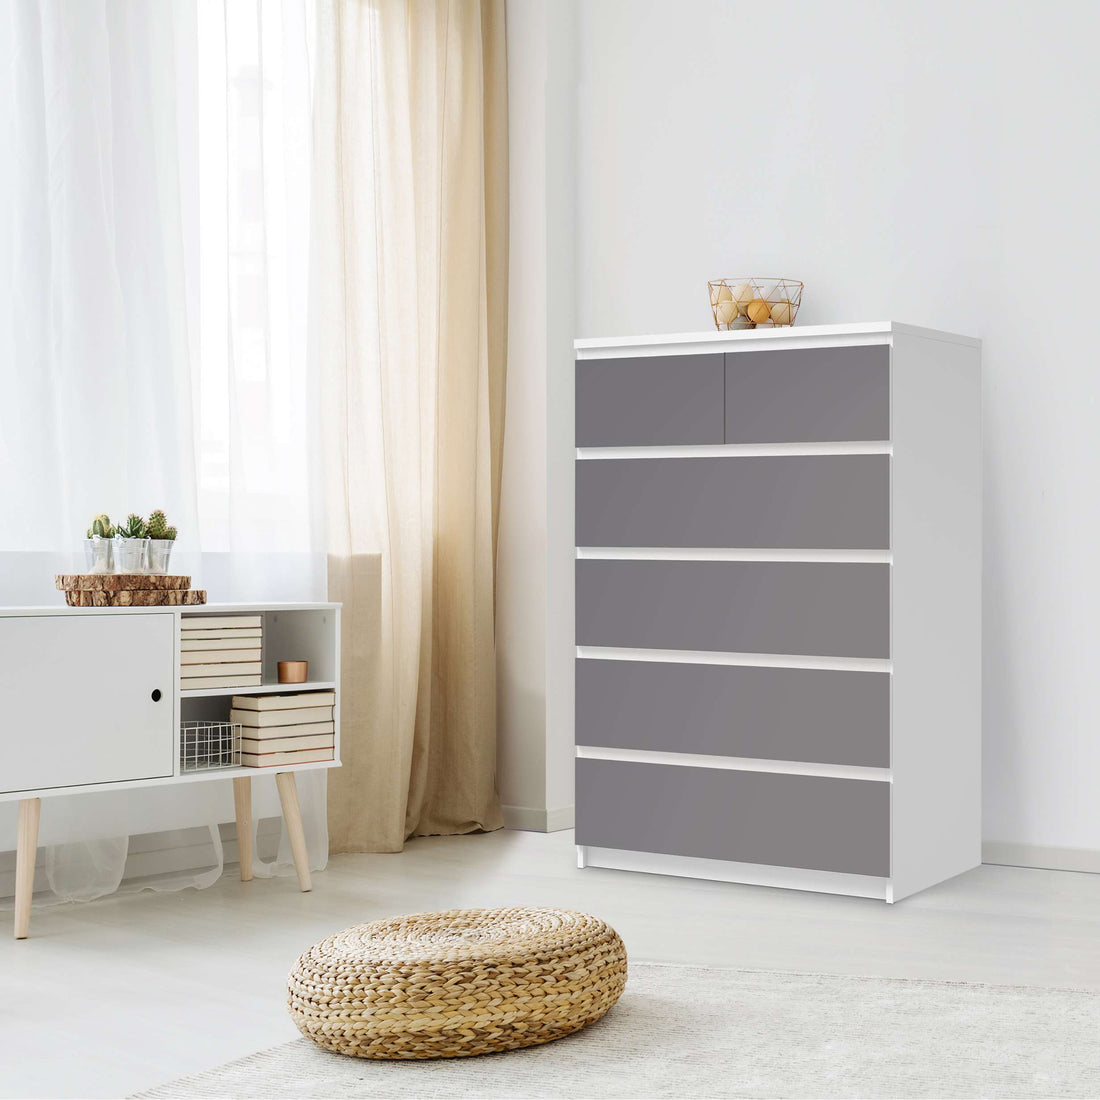 Möbel Klebefolie Grau Light - IKEA Malm Kommode 6 Schubladen (hoch) - Schlafzimmer